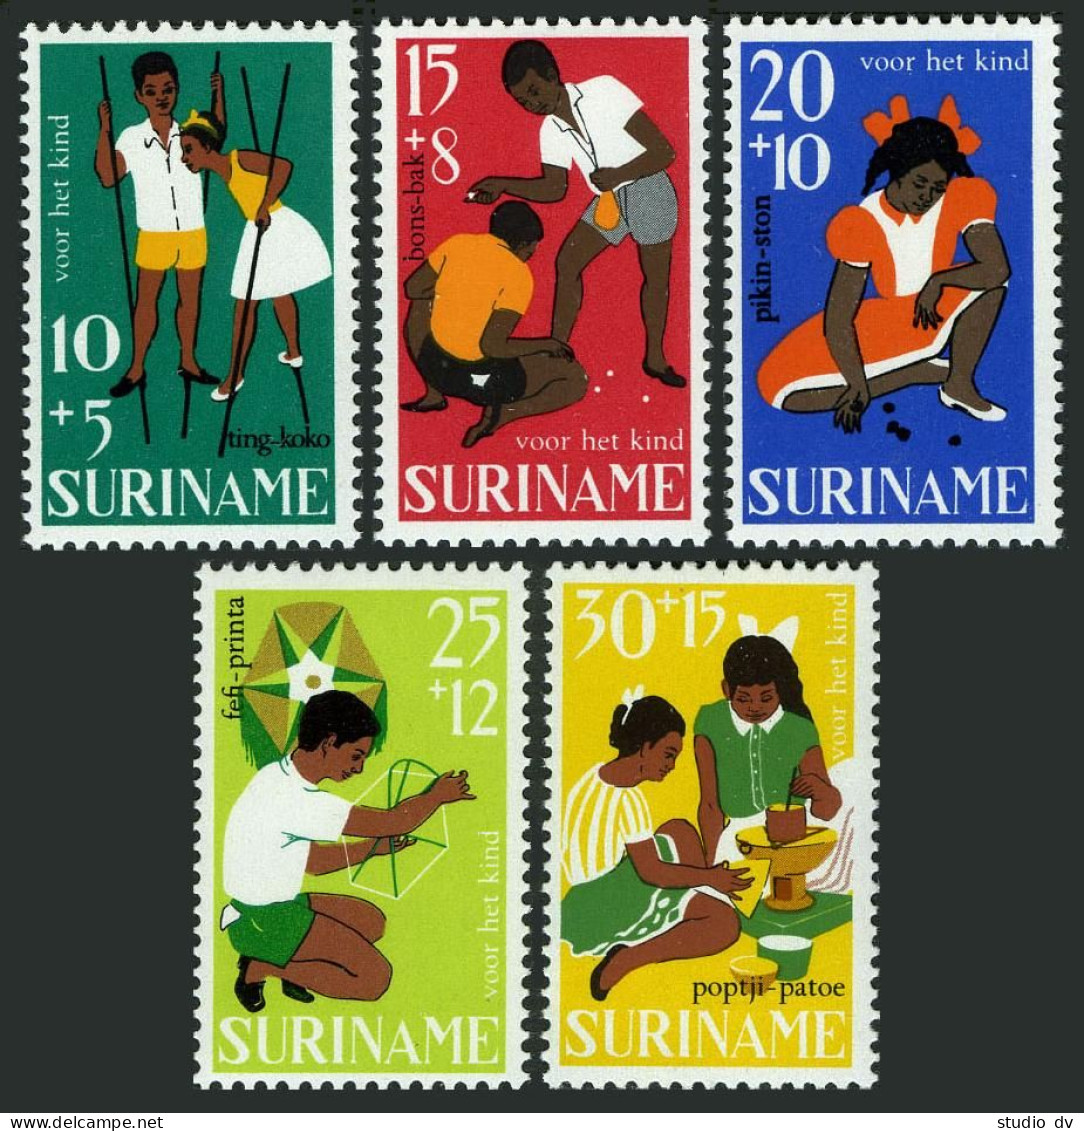 Surinam B137-B141,B139a Sheet, MNH. Michel 528-532,Bl.7. Children's Games, 1967. - Suriname